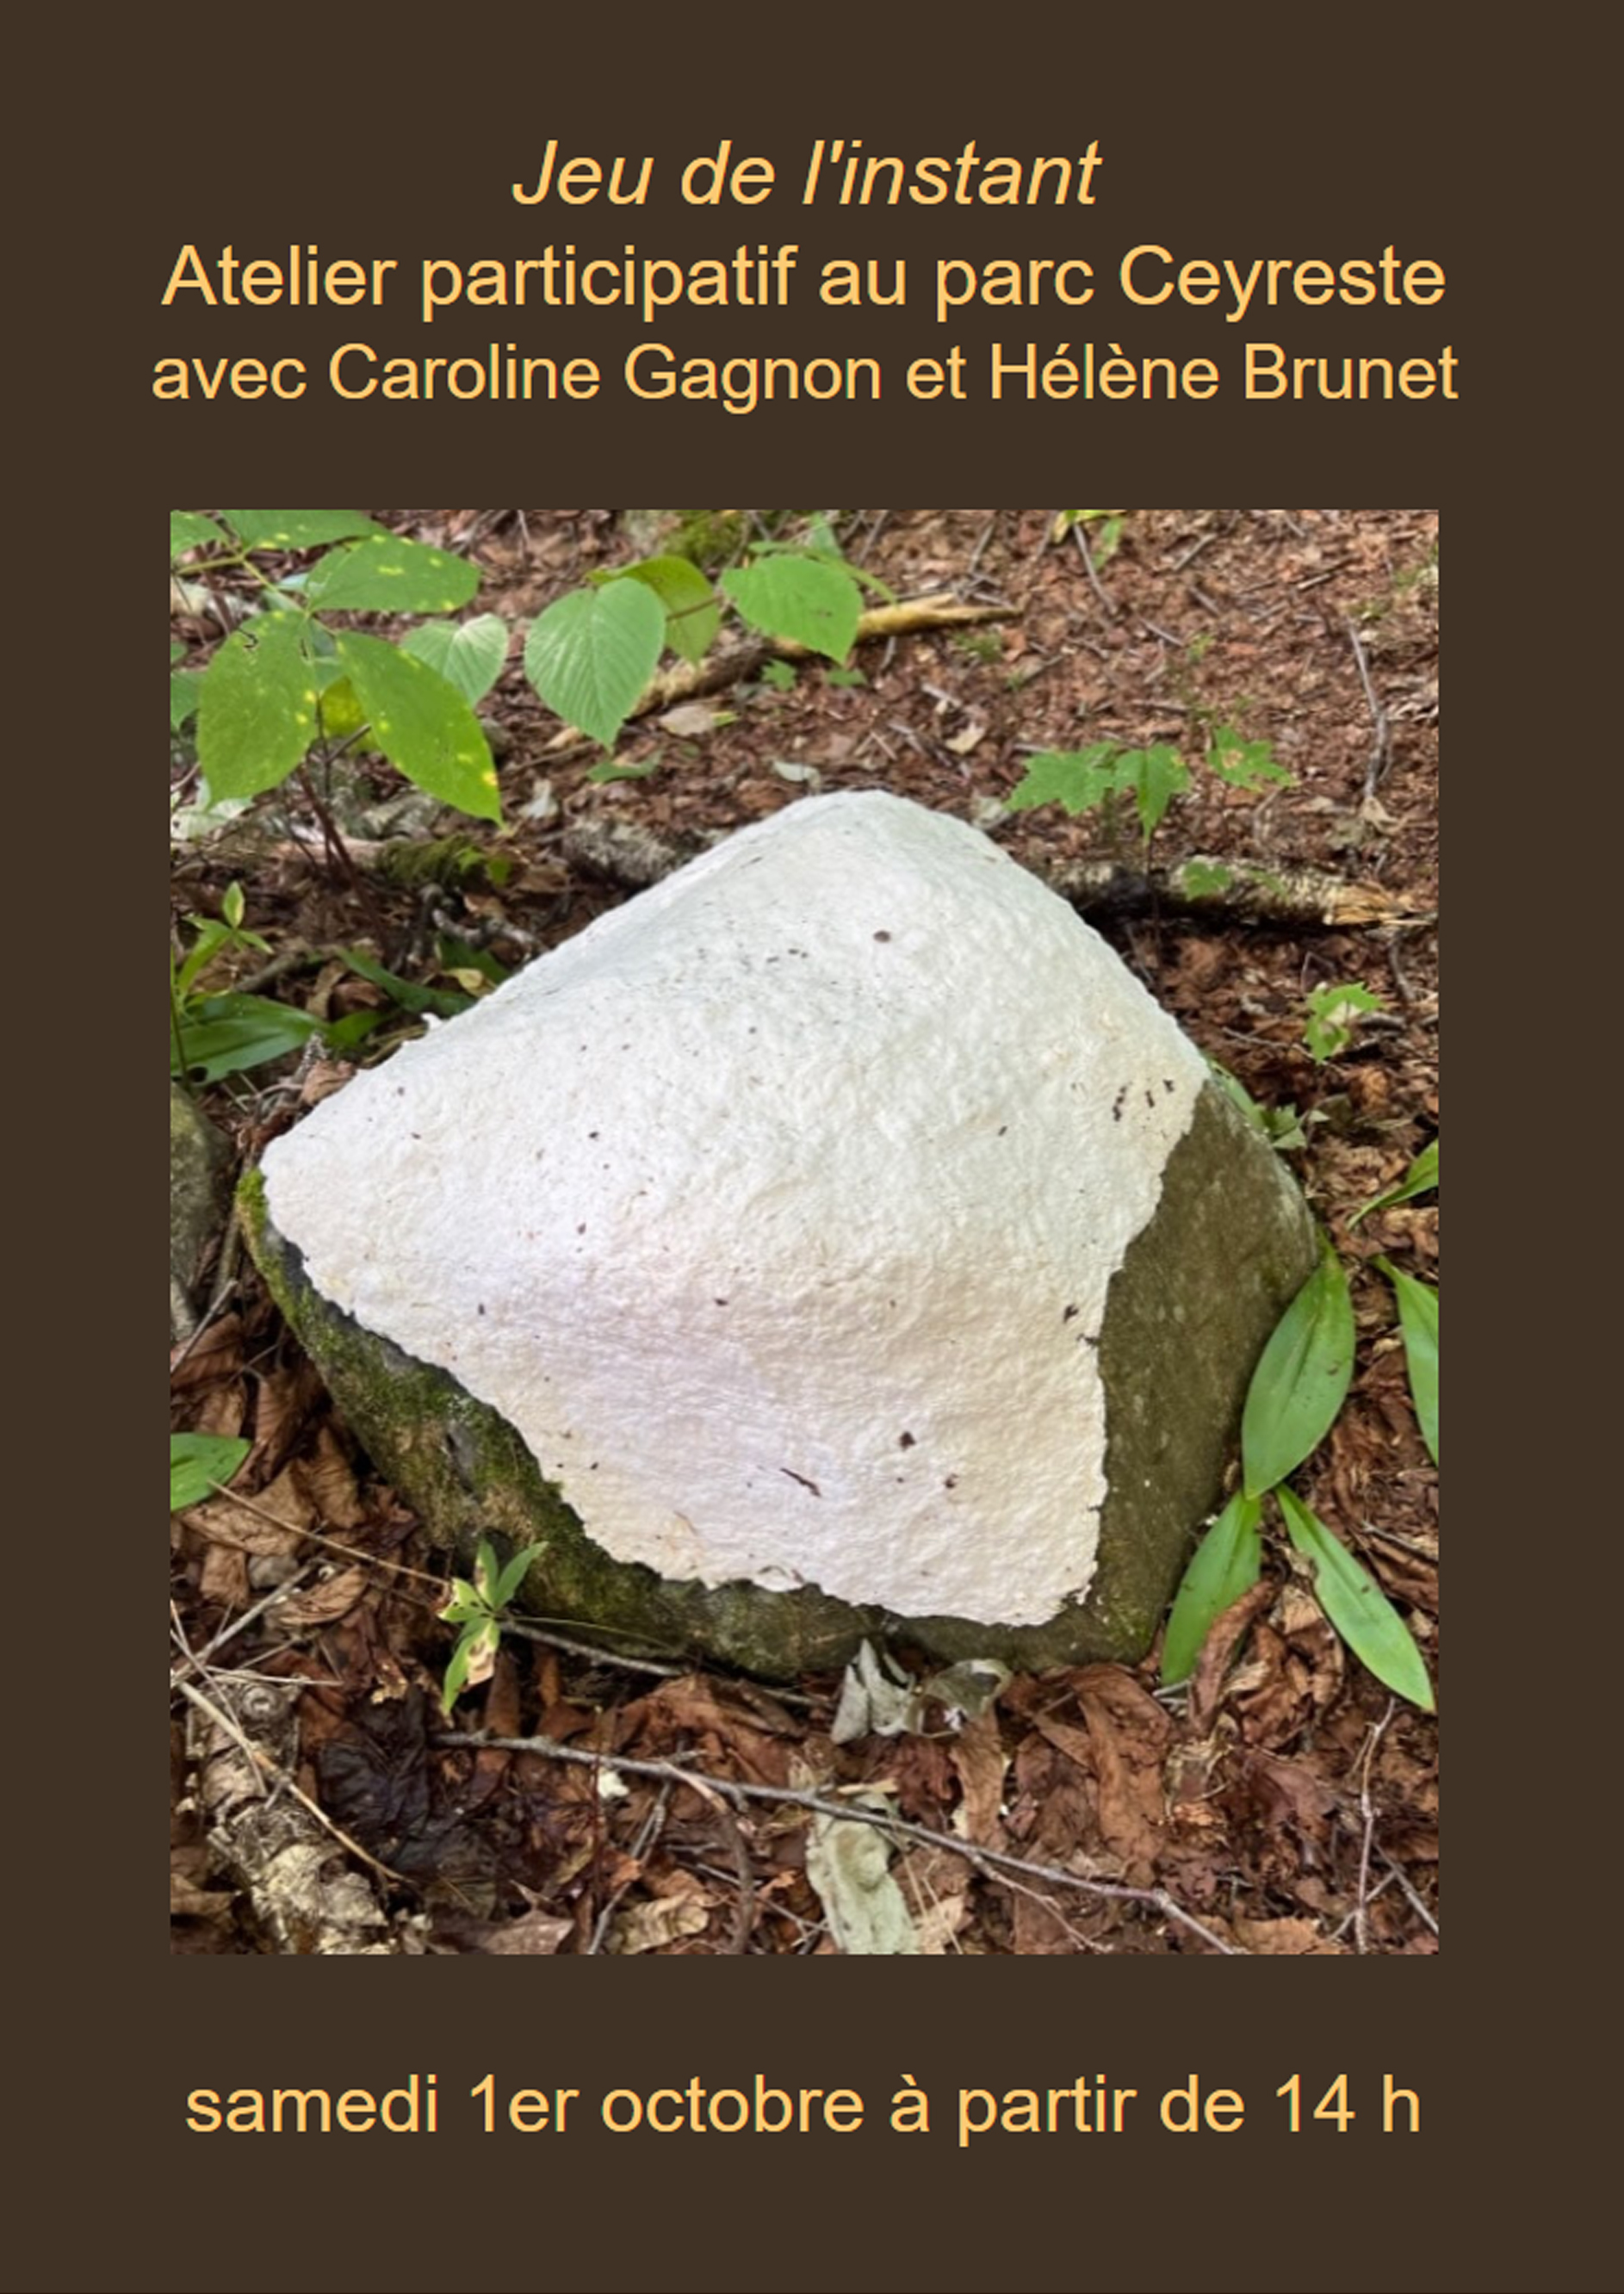 Caroline Gagnon et Hélène Brunet